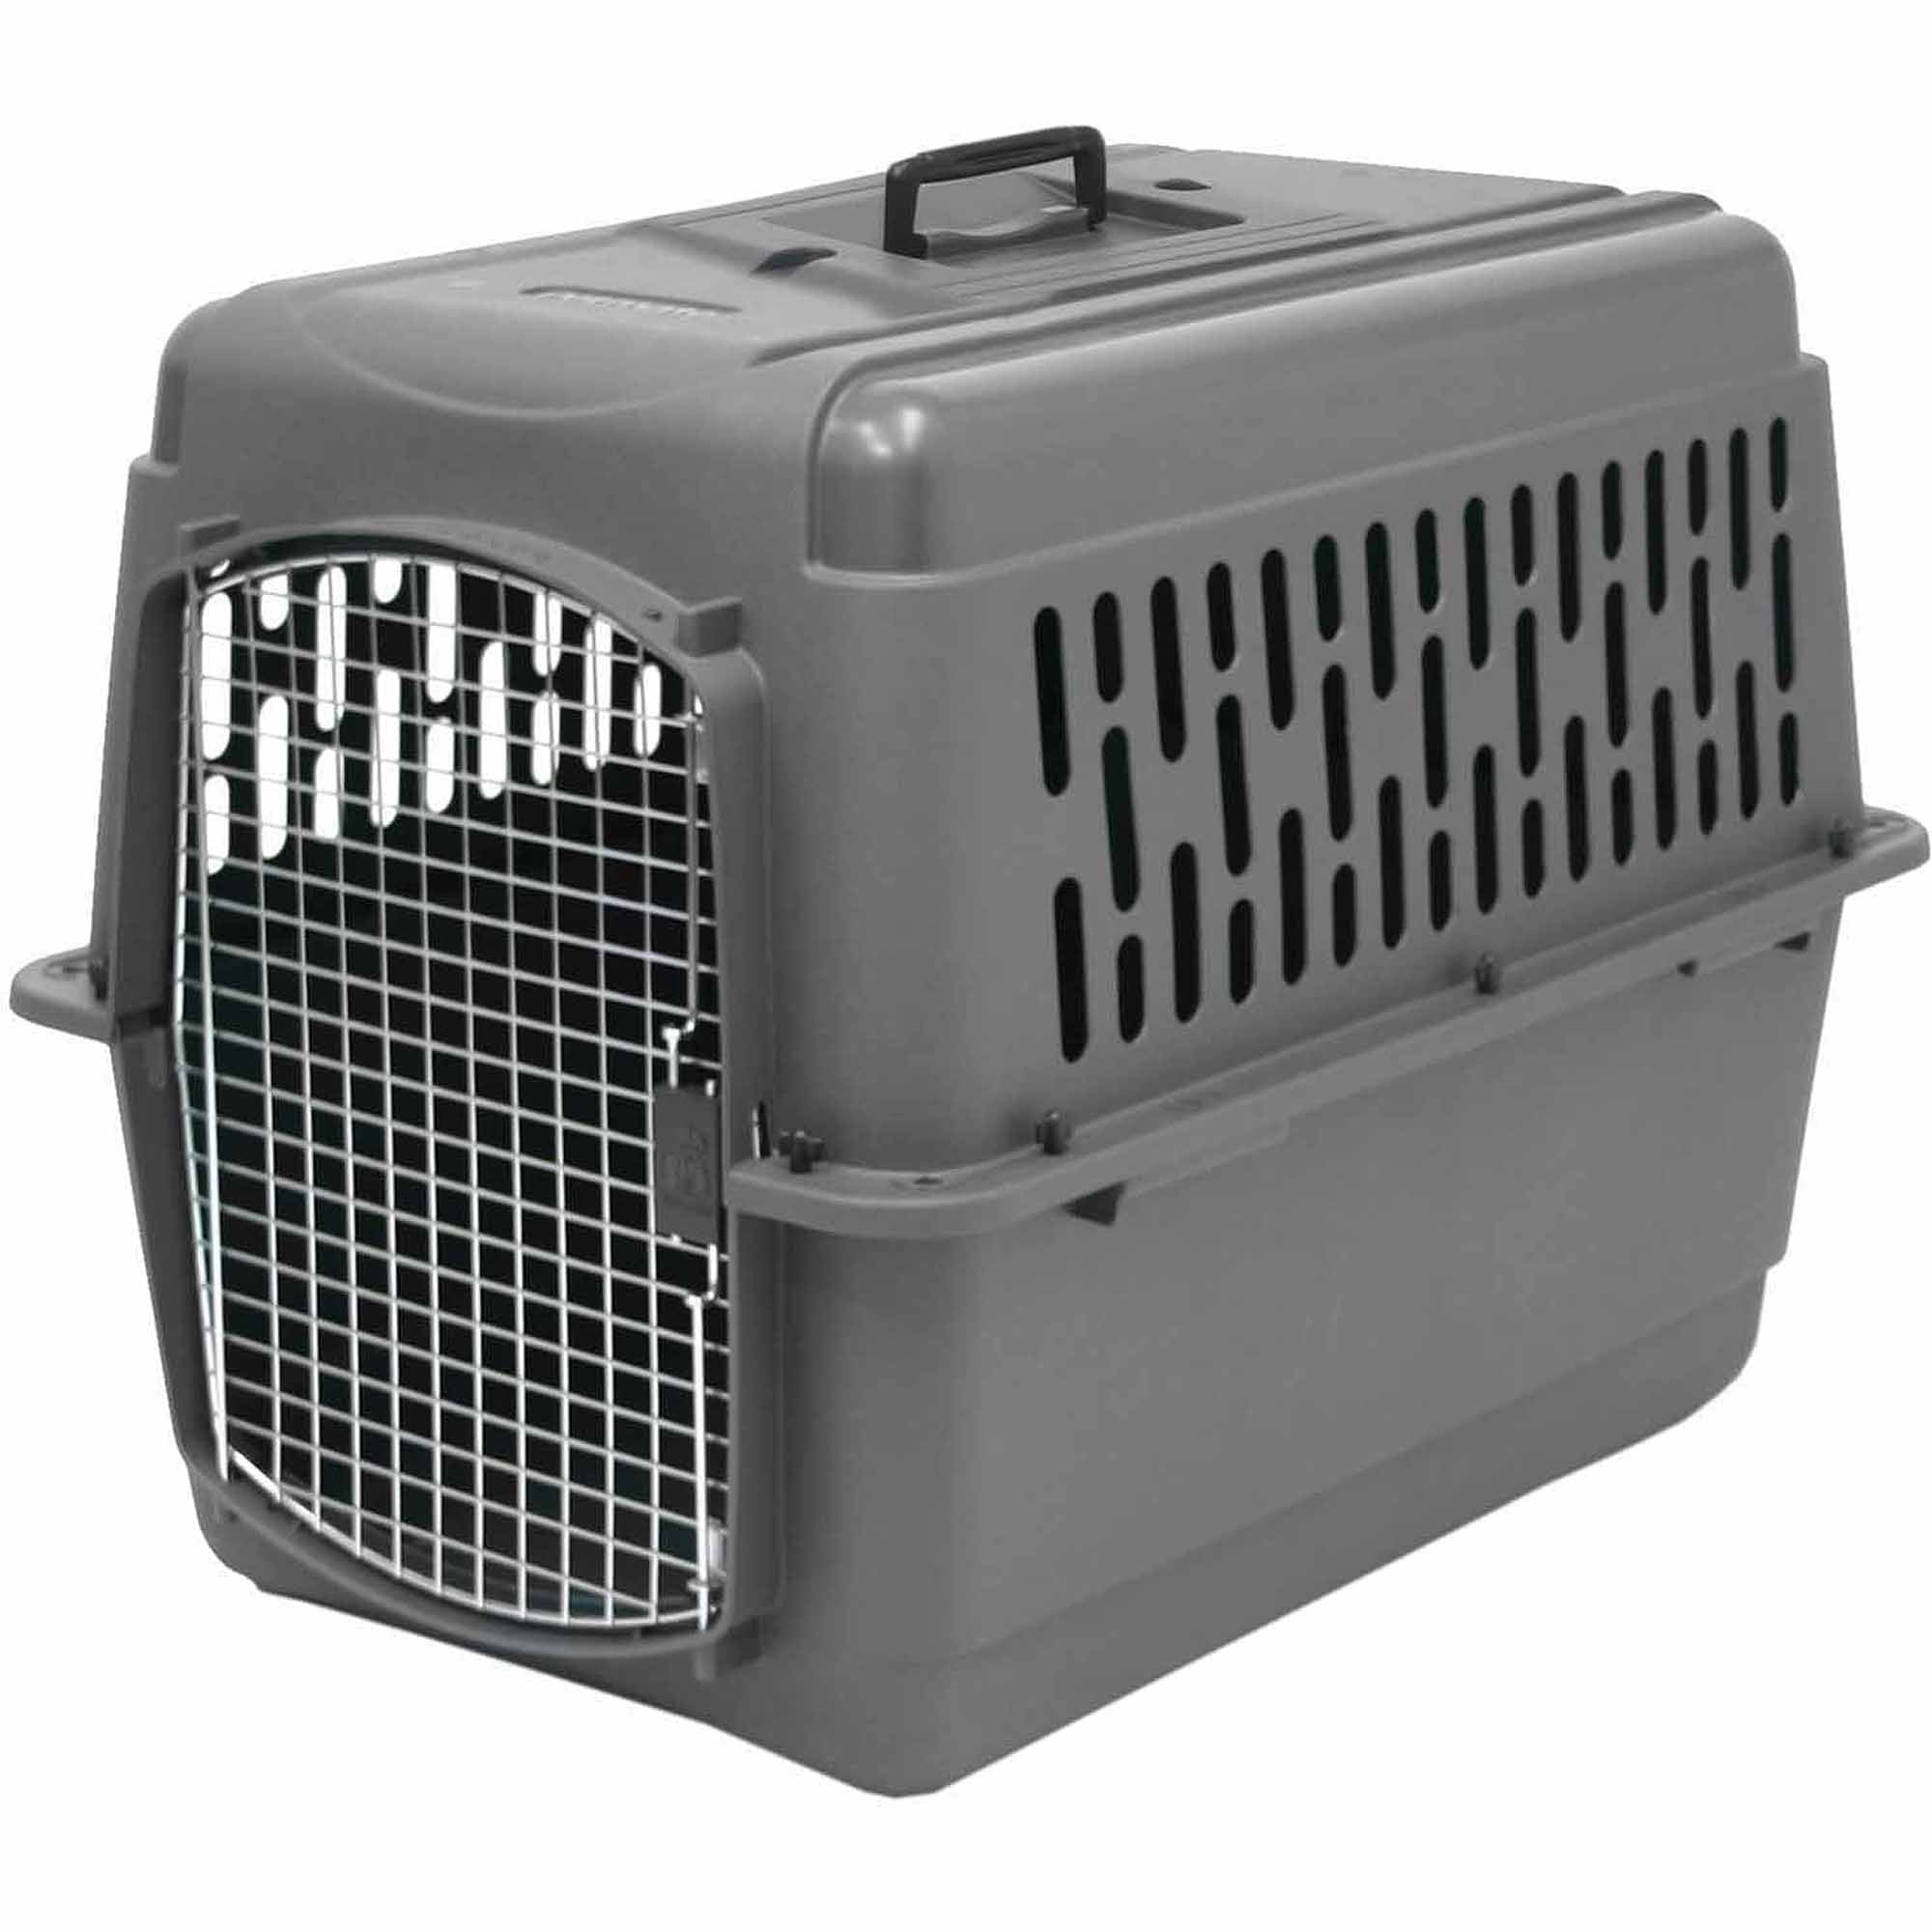 doskocil dog crate walmart